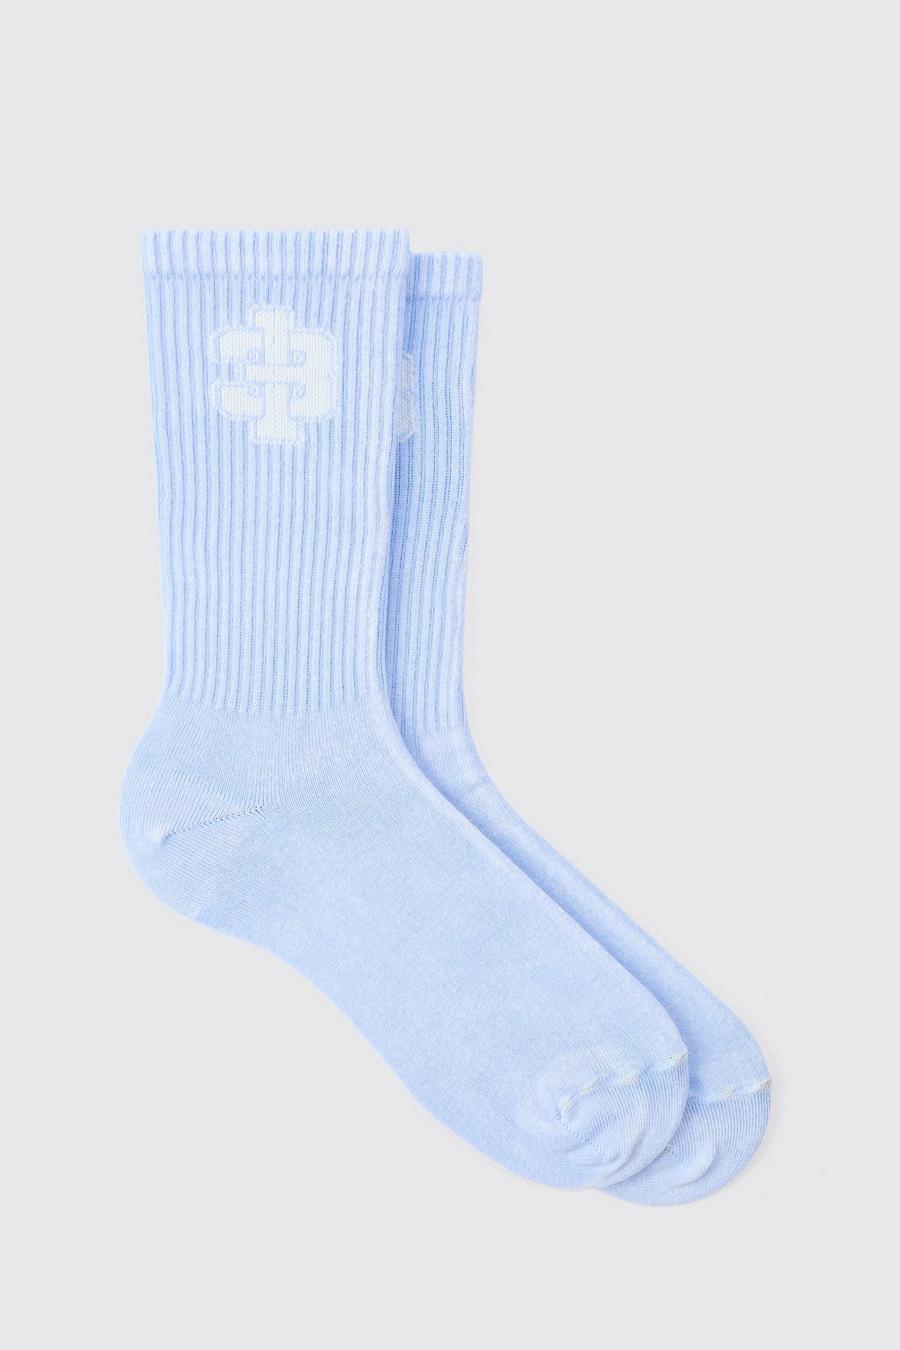 13 Jacquard Socken mit Acid-Waschung in Blau, Light blue